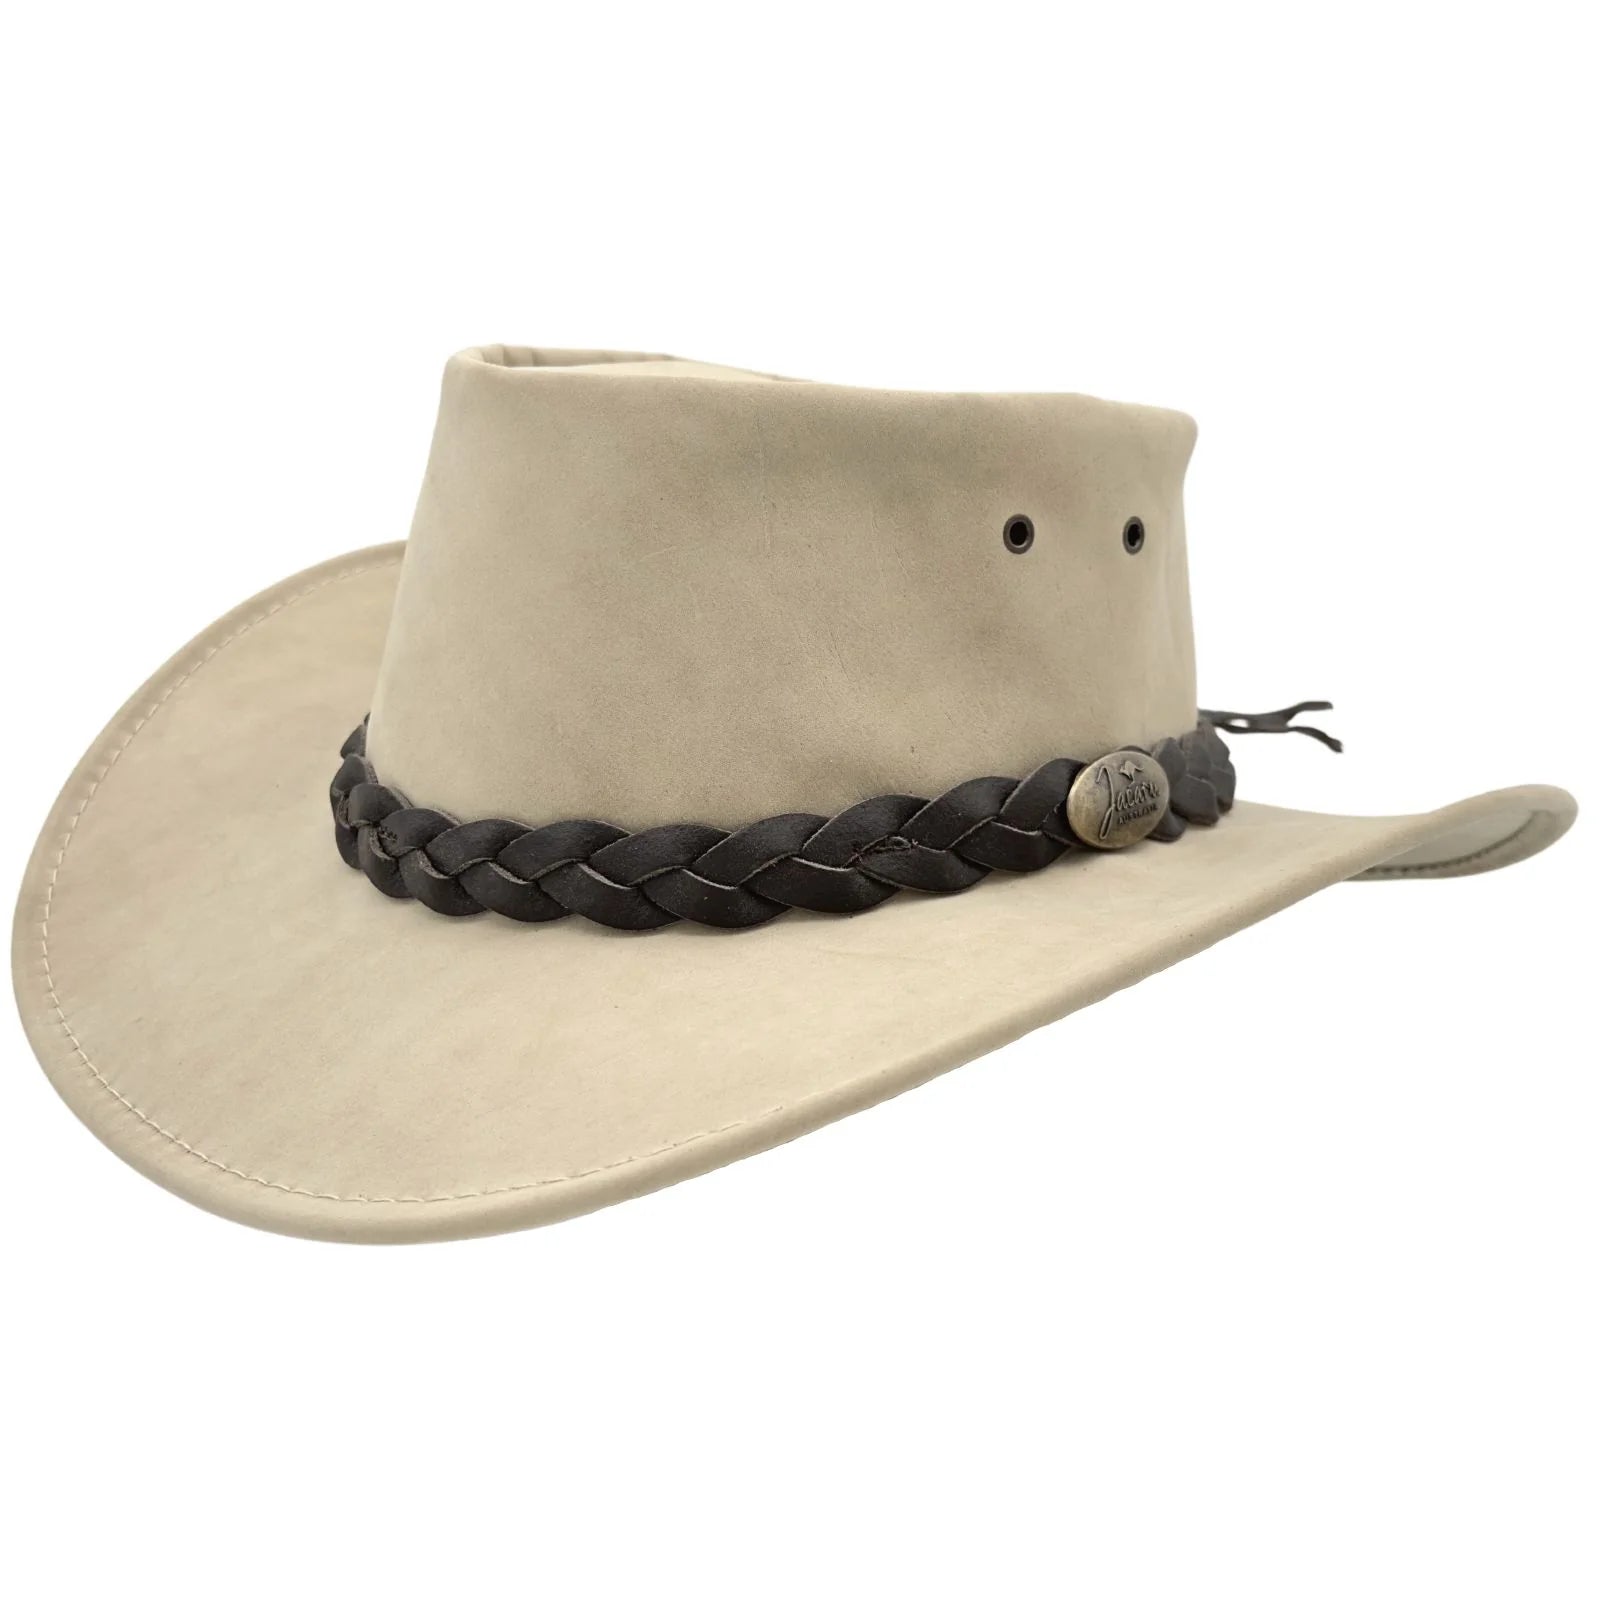 Barmah Hats Sundowner Kangaroo Leather Hat 1019BL / 1019BR